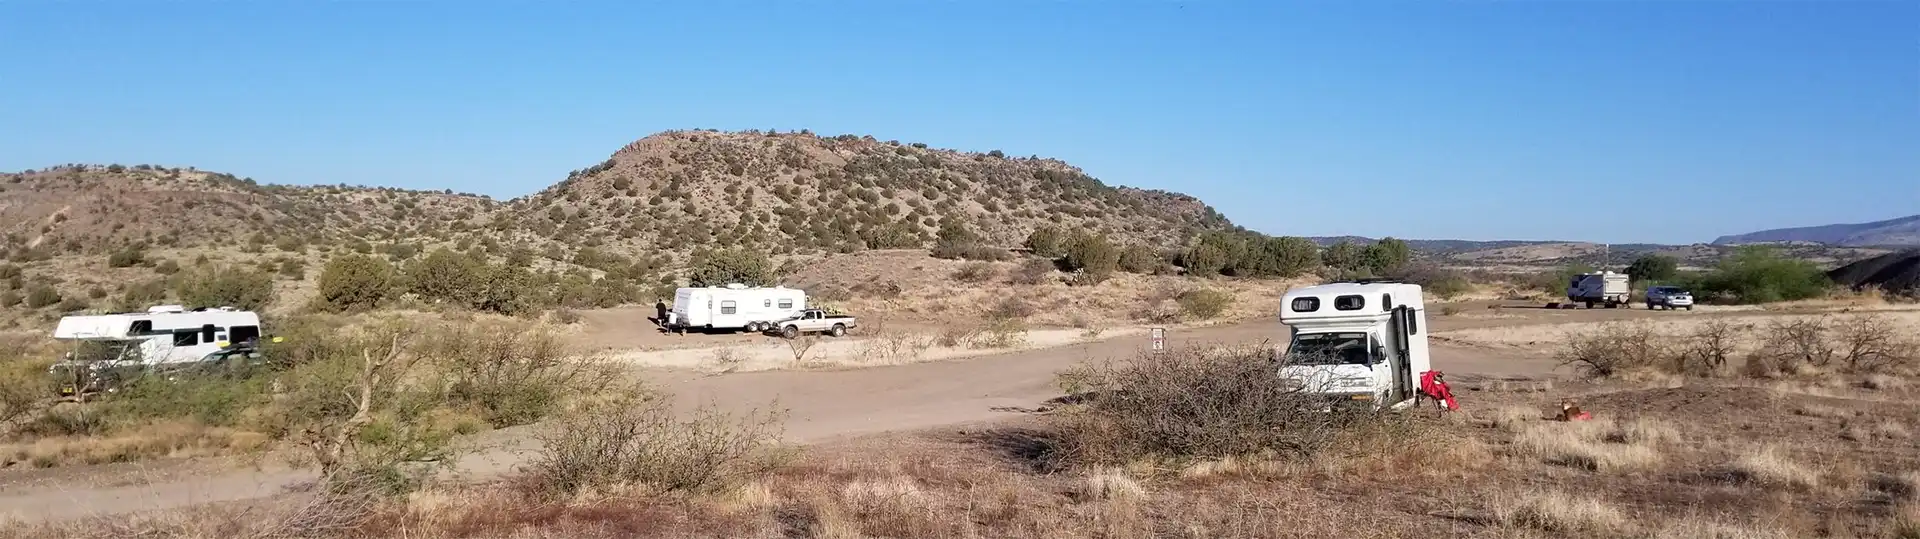 Rockview Designated Camping Area, Sedona, AZ